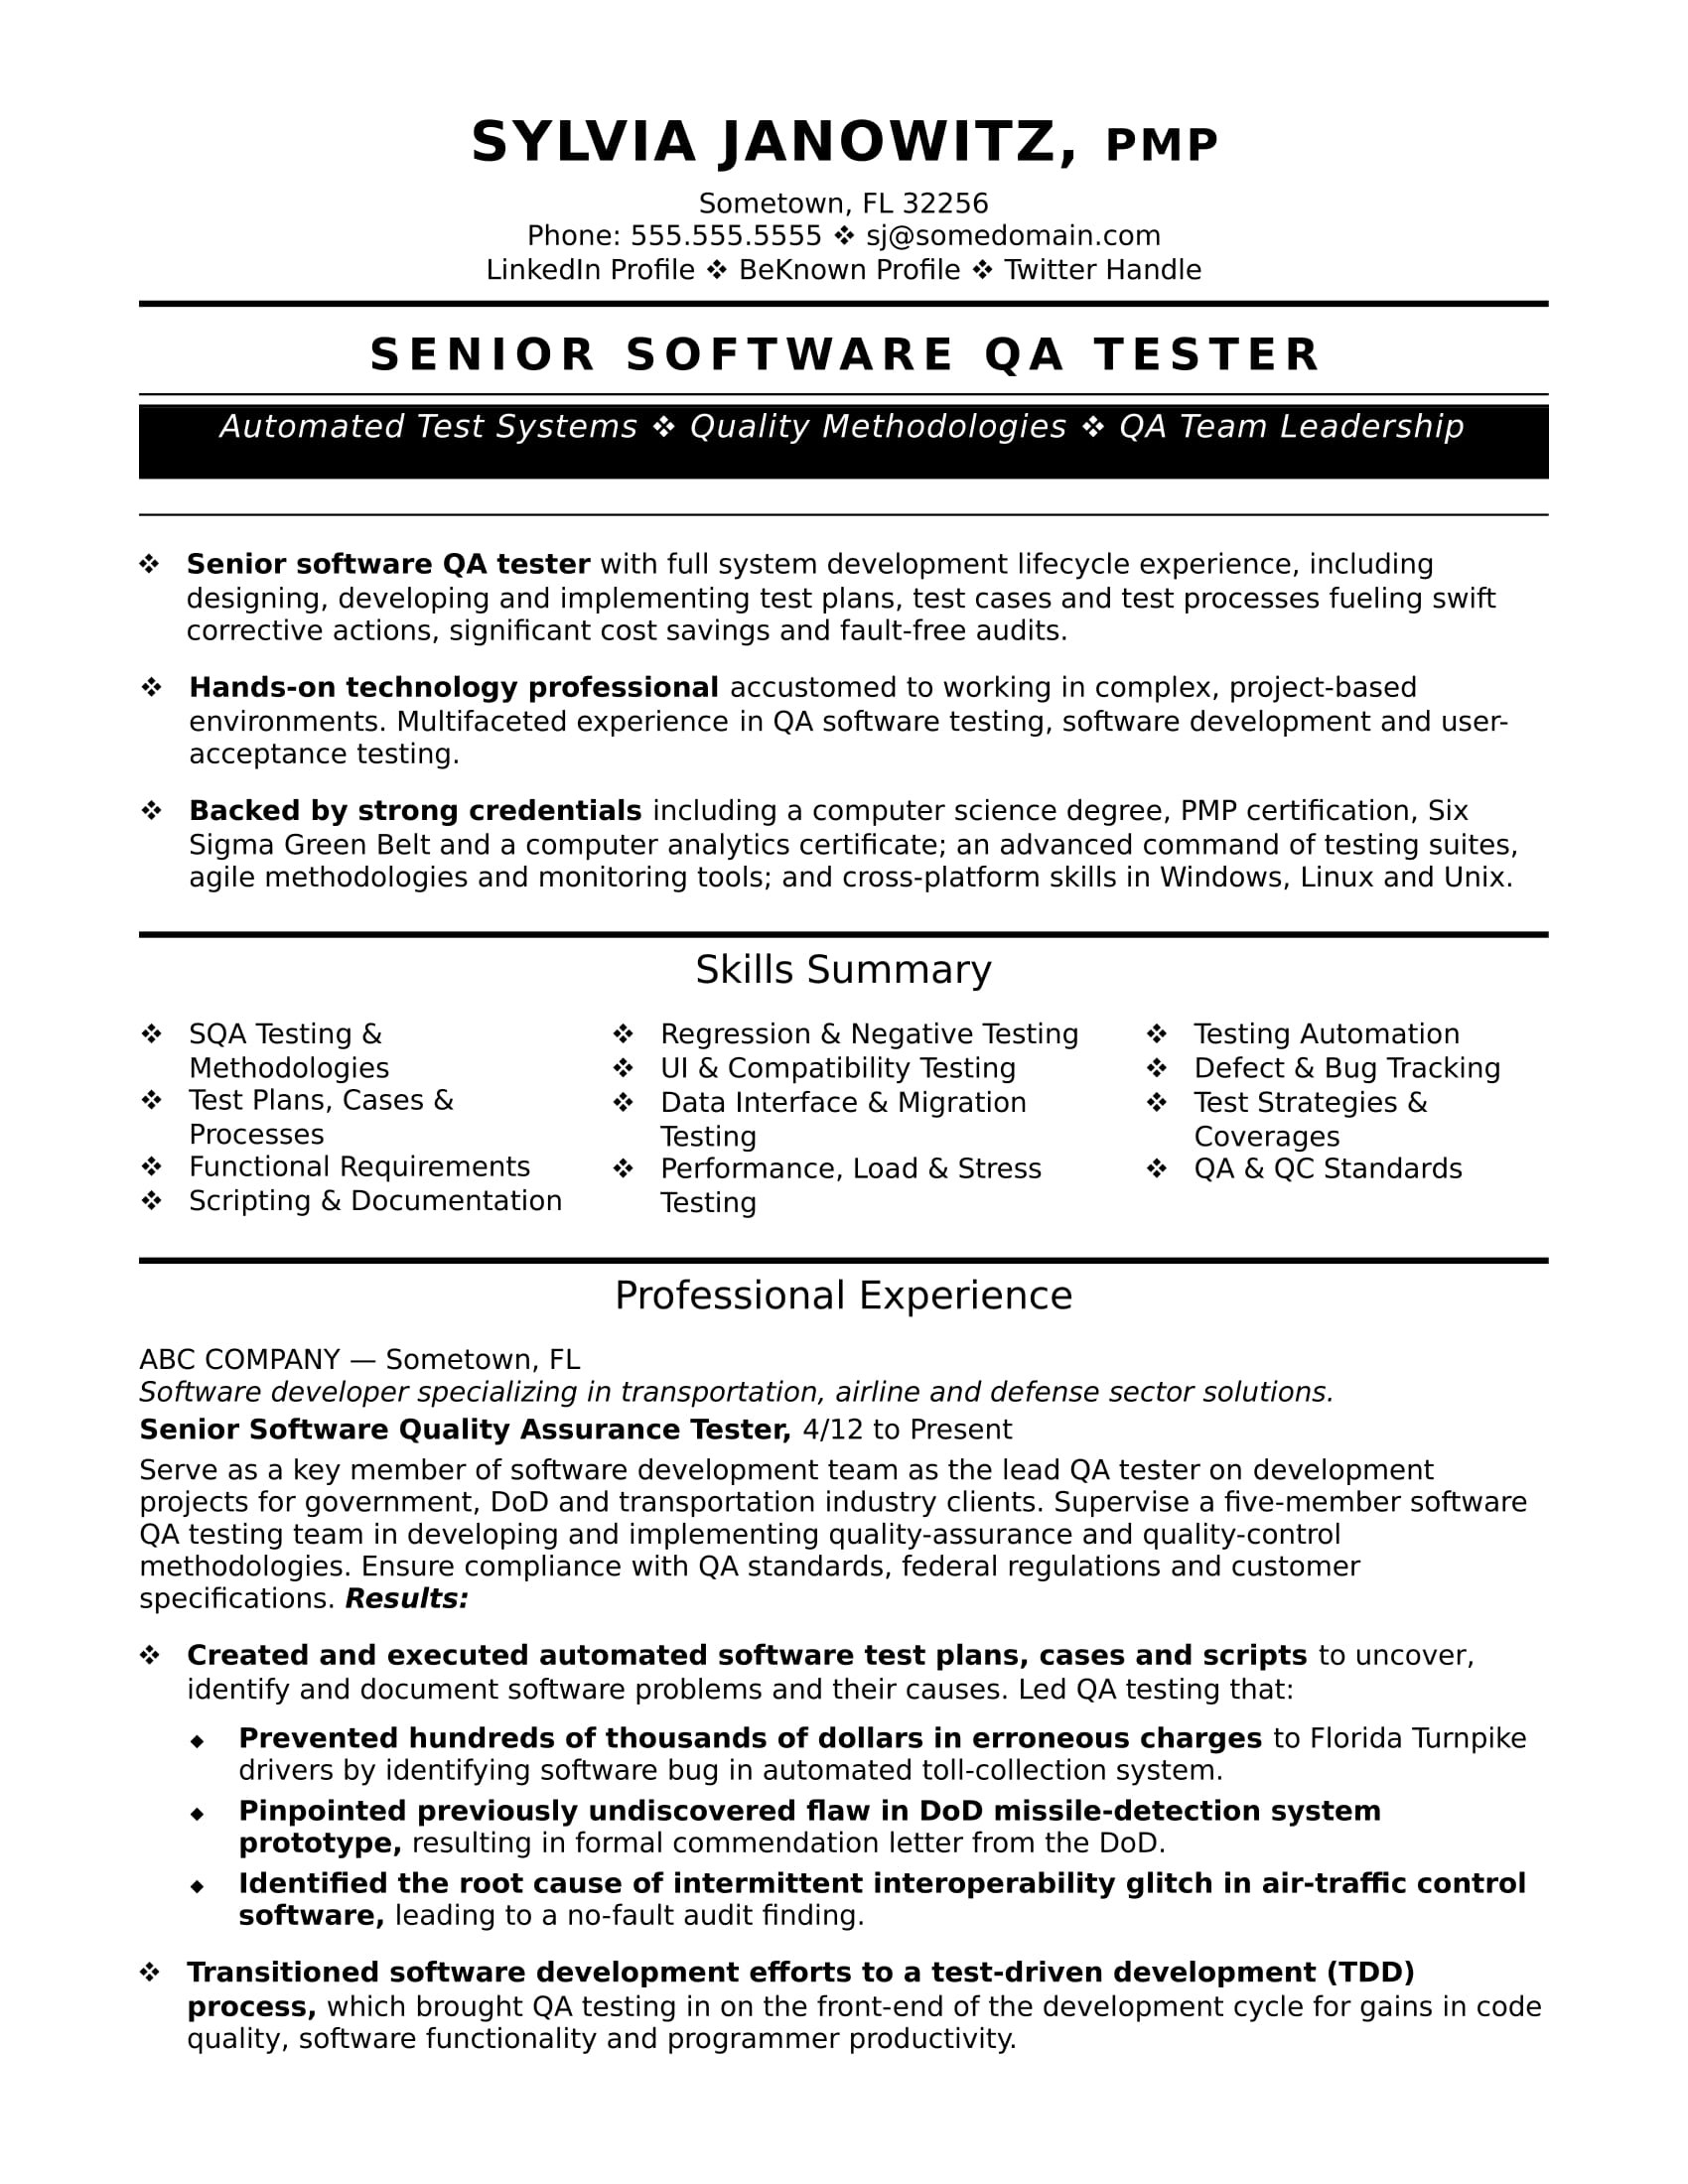 Software Testing Resume Samples 7 Years Experience Experienced Qa software Tester Resume Sample Monster.com